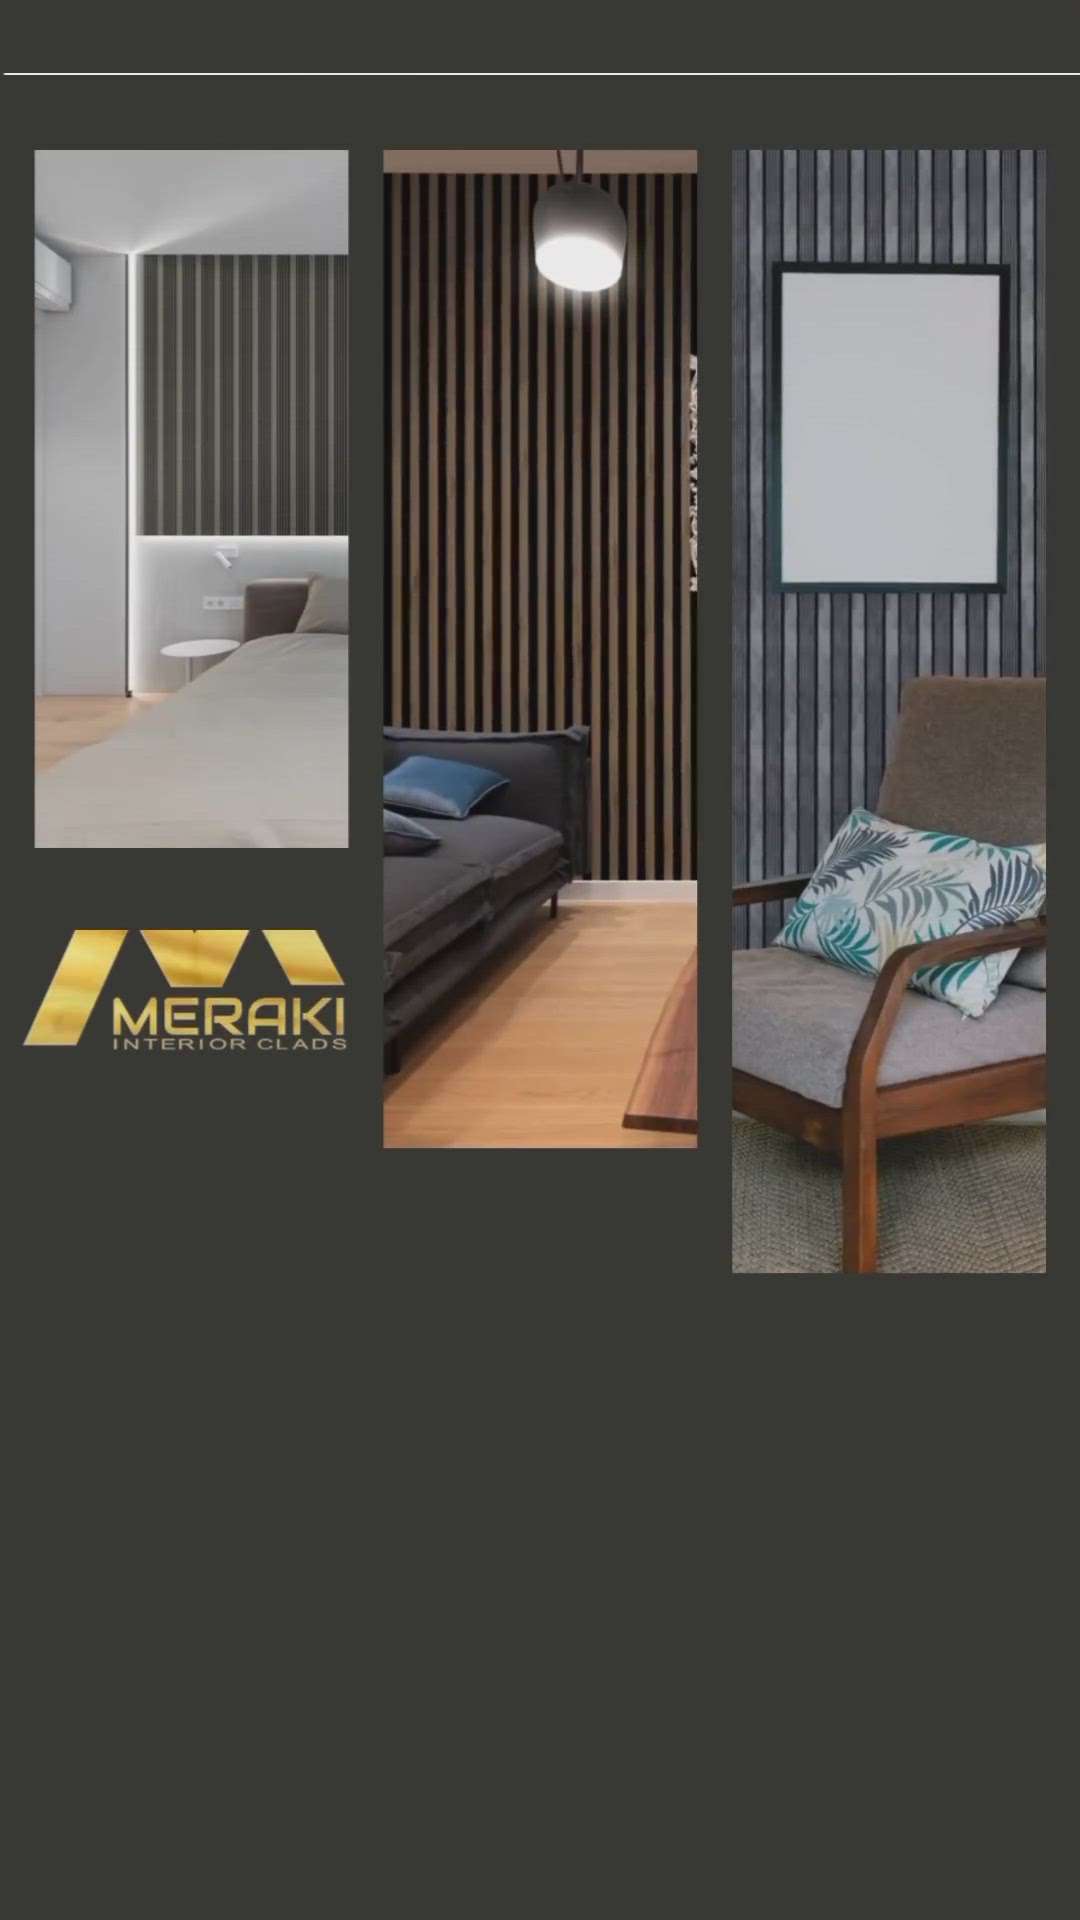 Transform your spaces into a masterpiece with Meraki Interior Clads 🌟
For enquiries contact 7907805100

 #MERAKI #HomeDecor #InteriorDesigner #cladding #wallpanels #Charcoallouvers #louverspanel #louver #